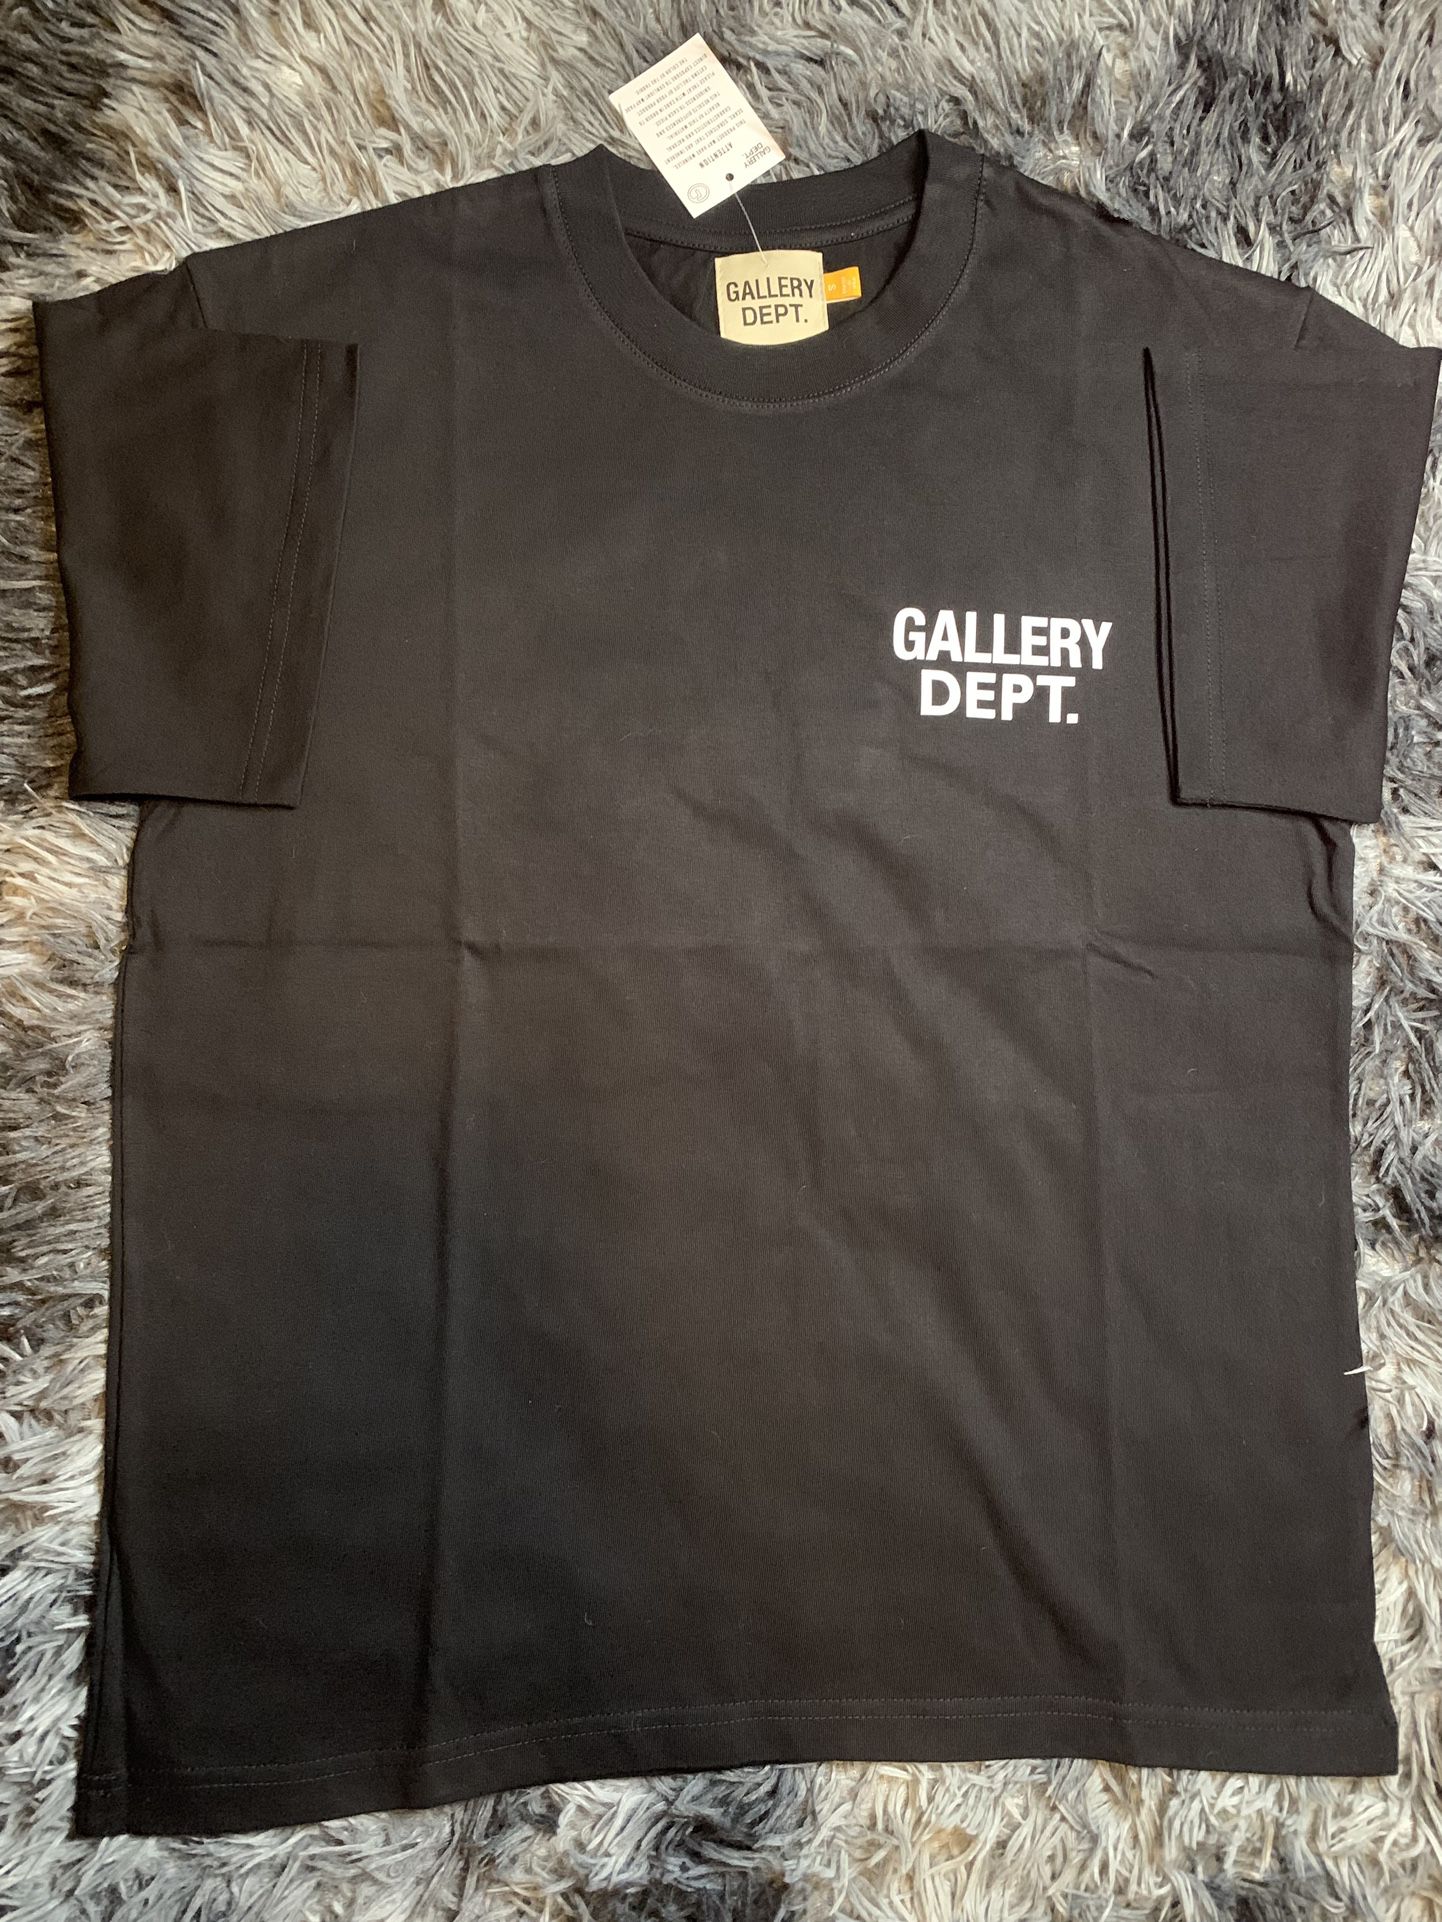 Black Gallery Dept T-Shirt Size Small Men